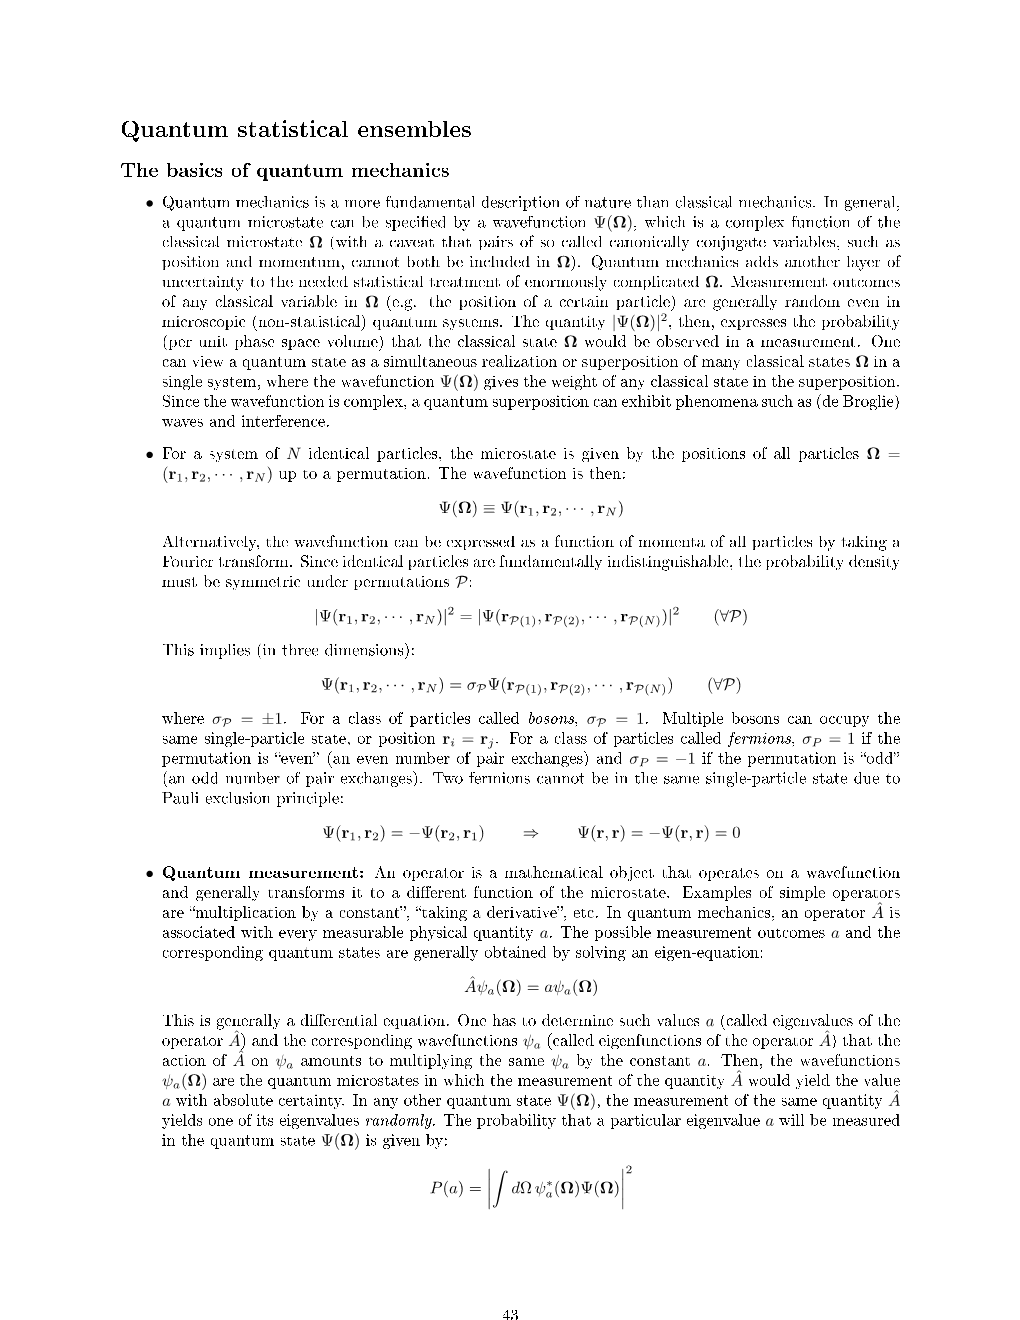 Quantum Statistical Ensembles the Basics of Quantum Mechanics